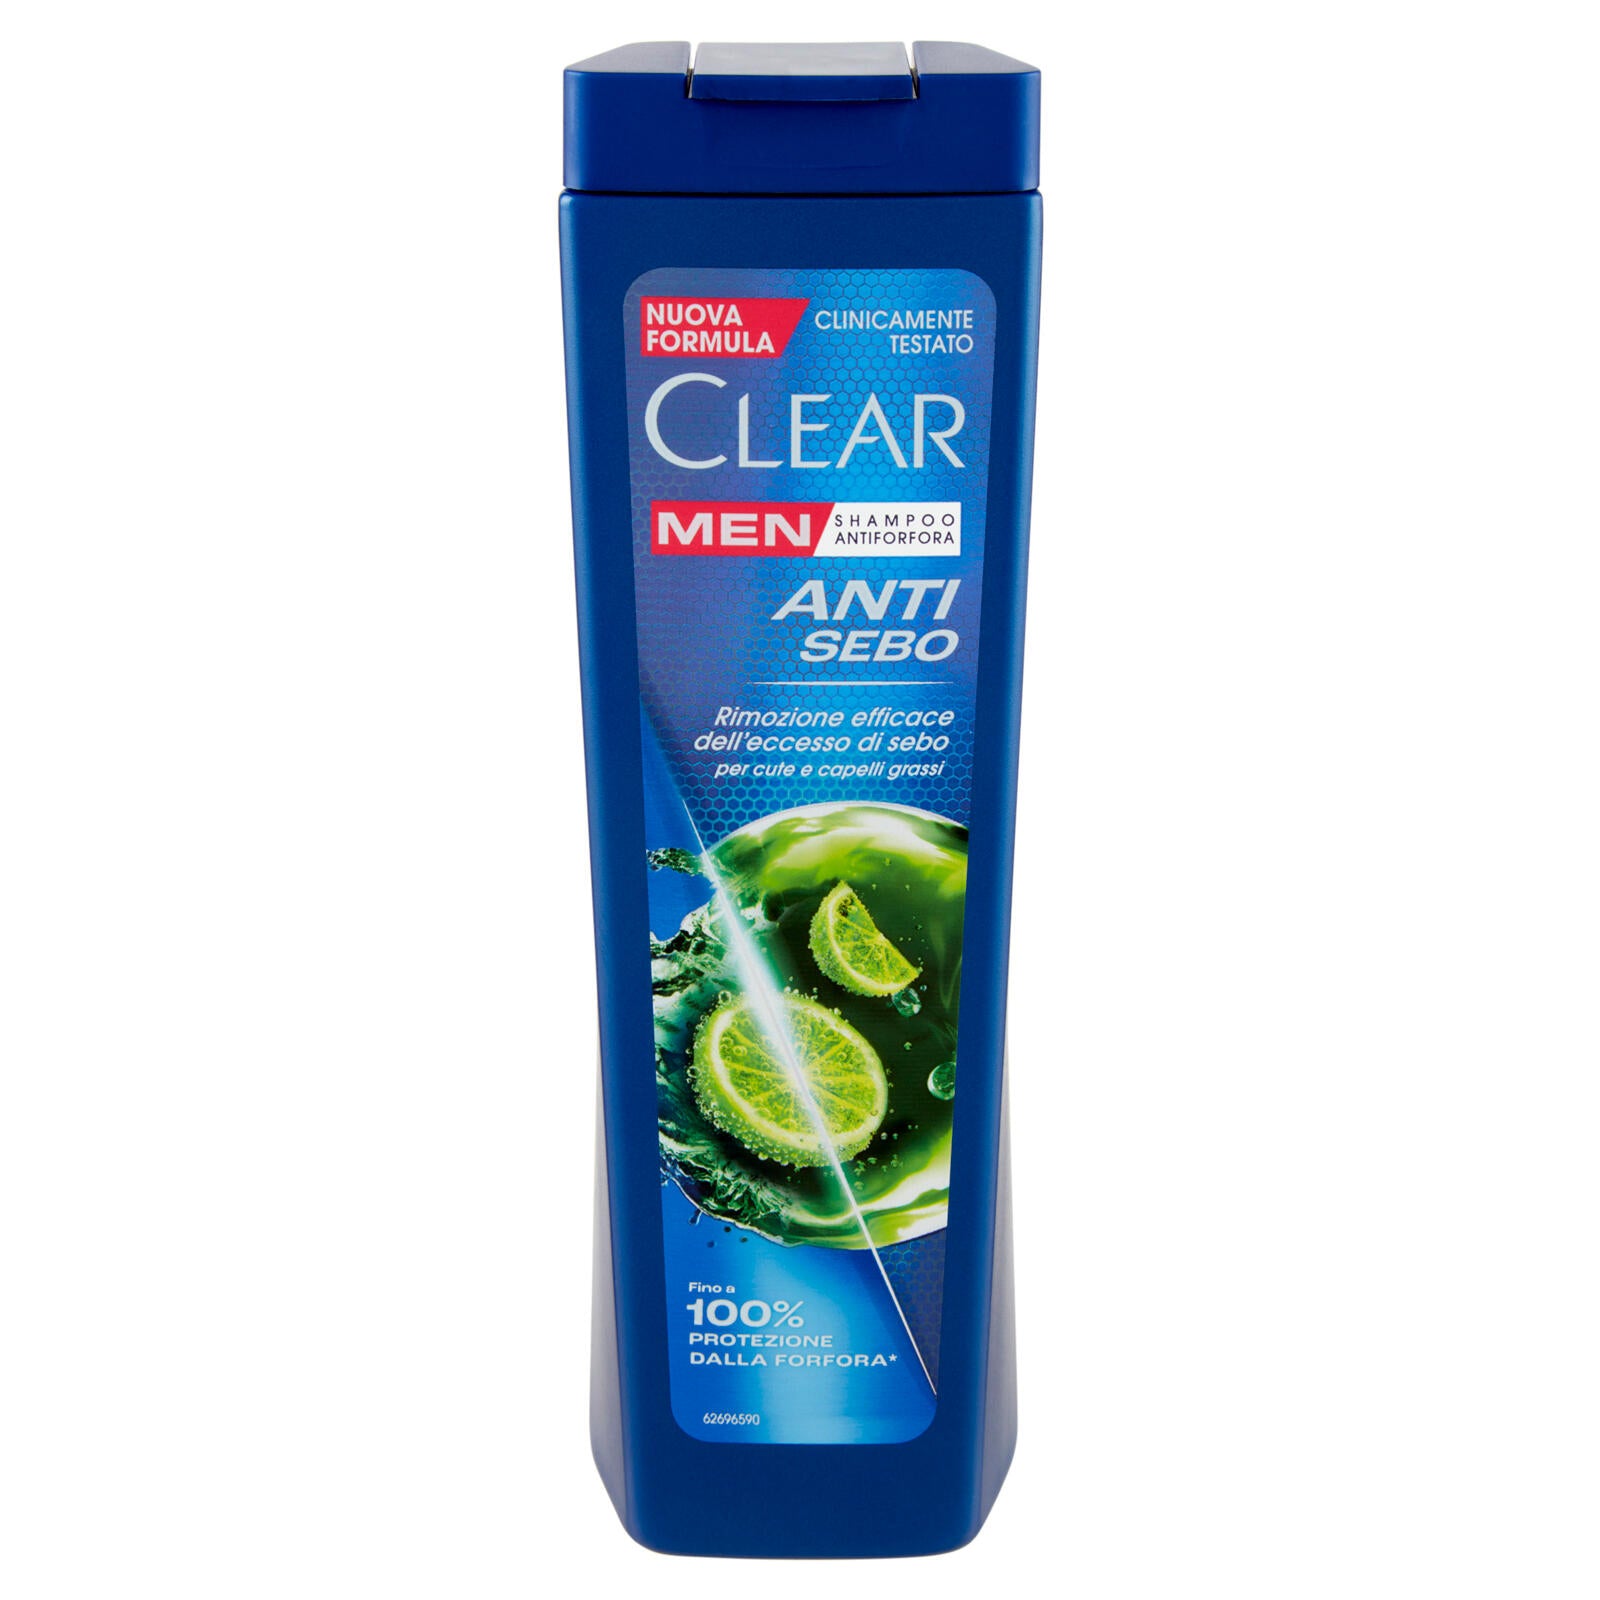 Clear Men Shampoo Antiforfora Anti Sebo 225 ml